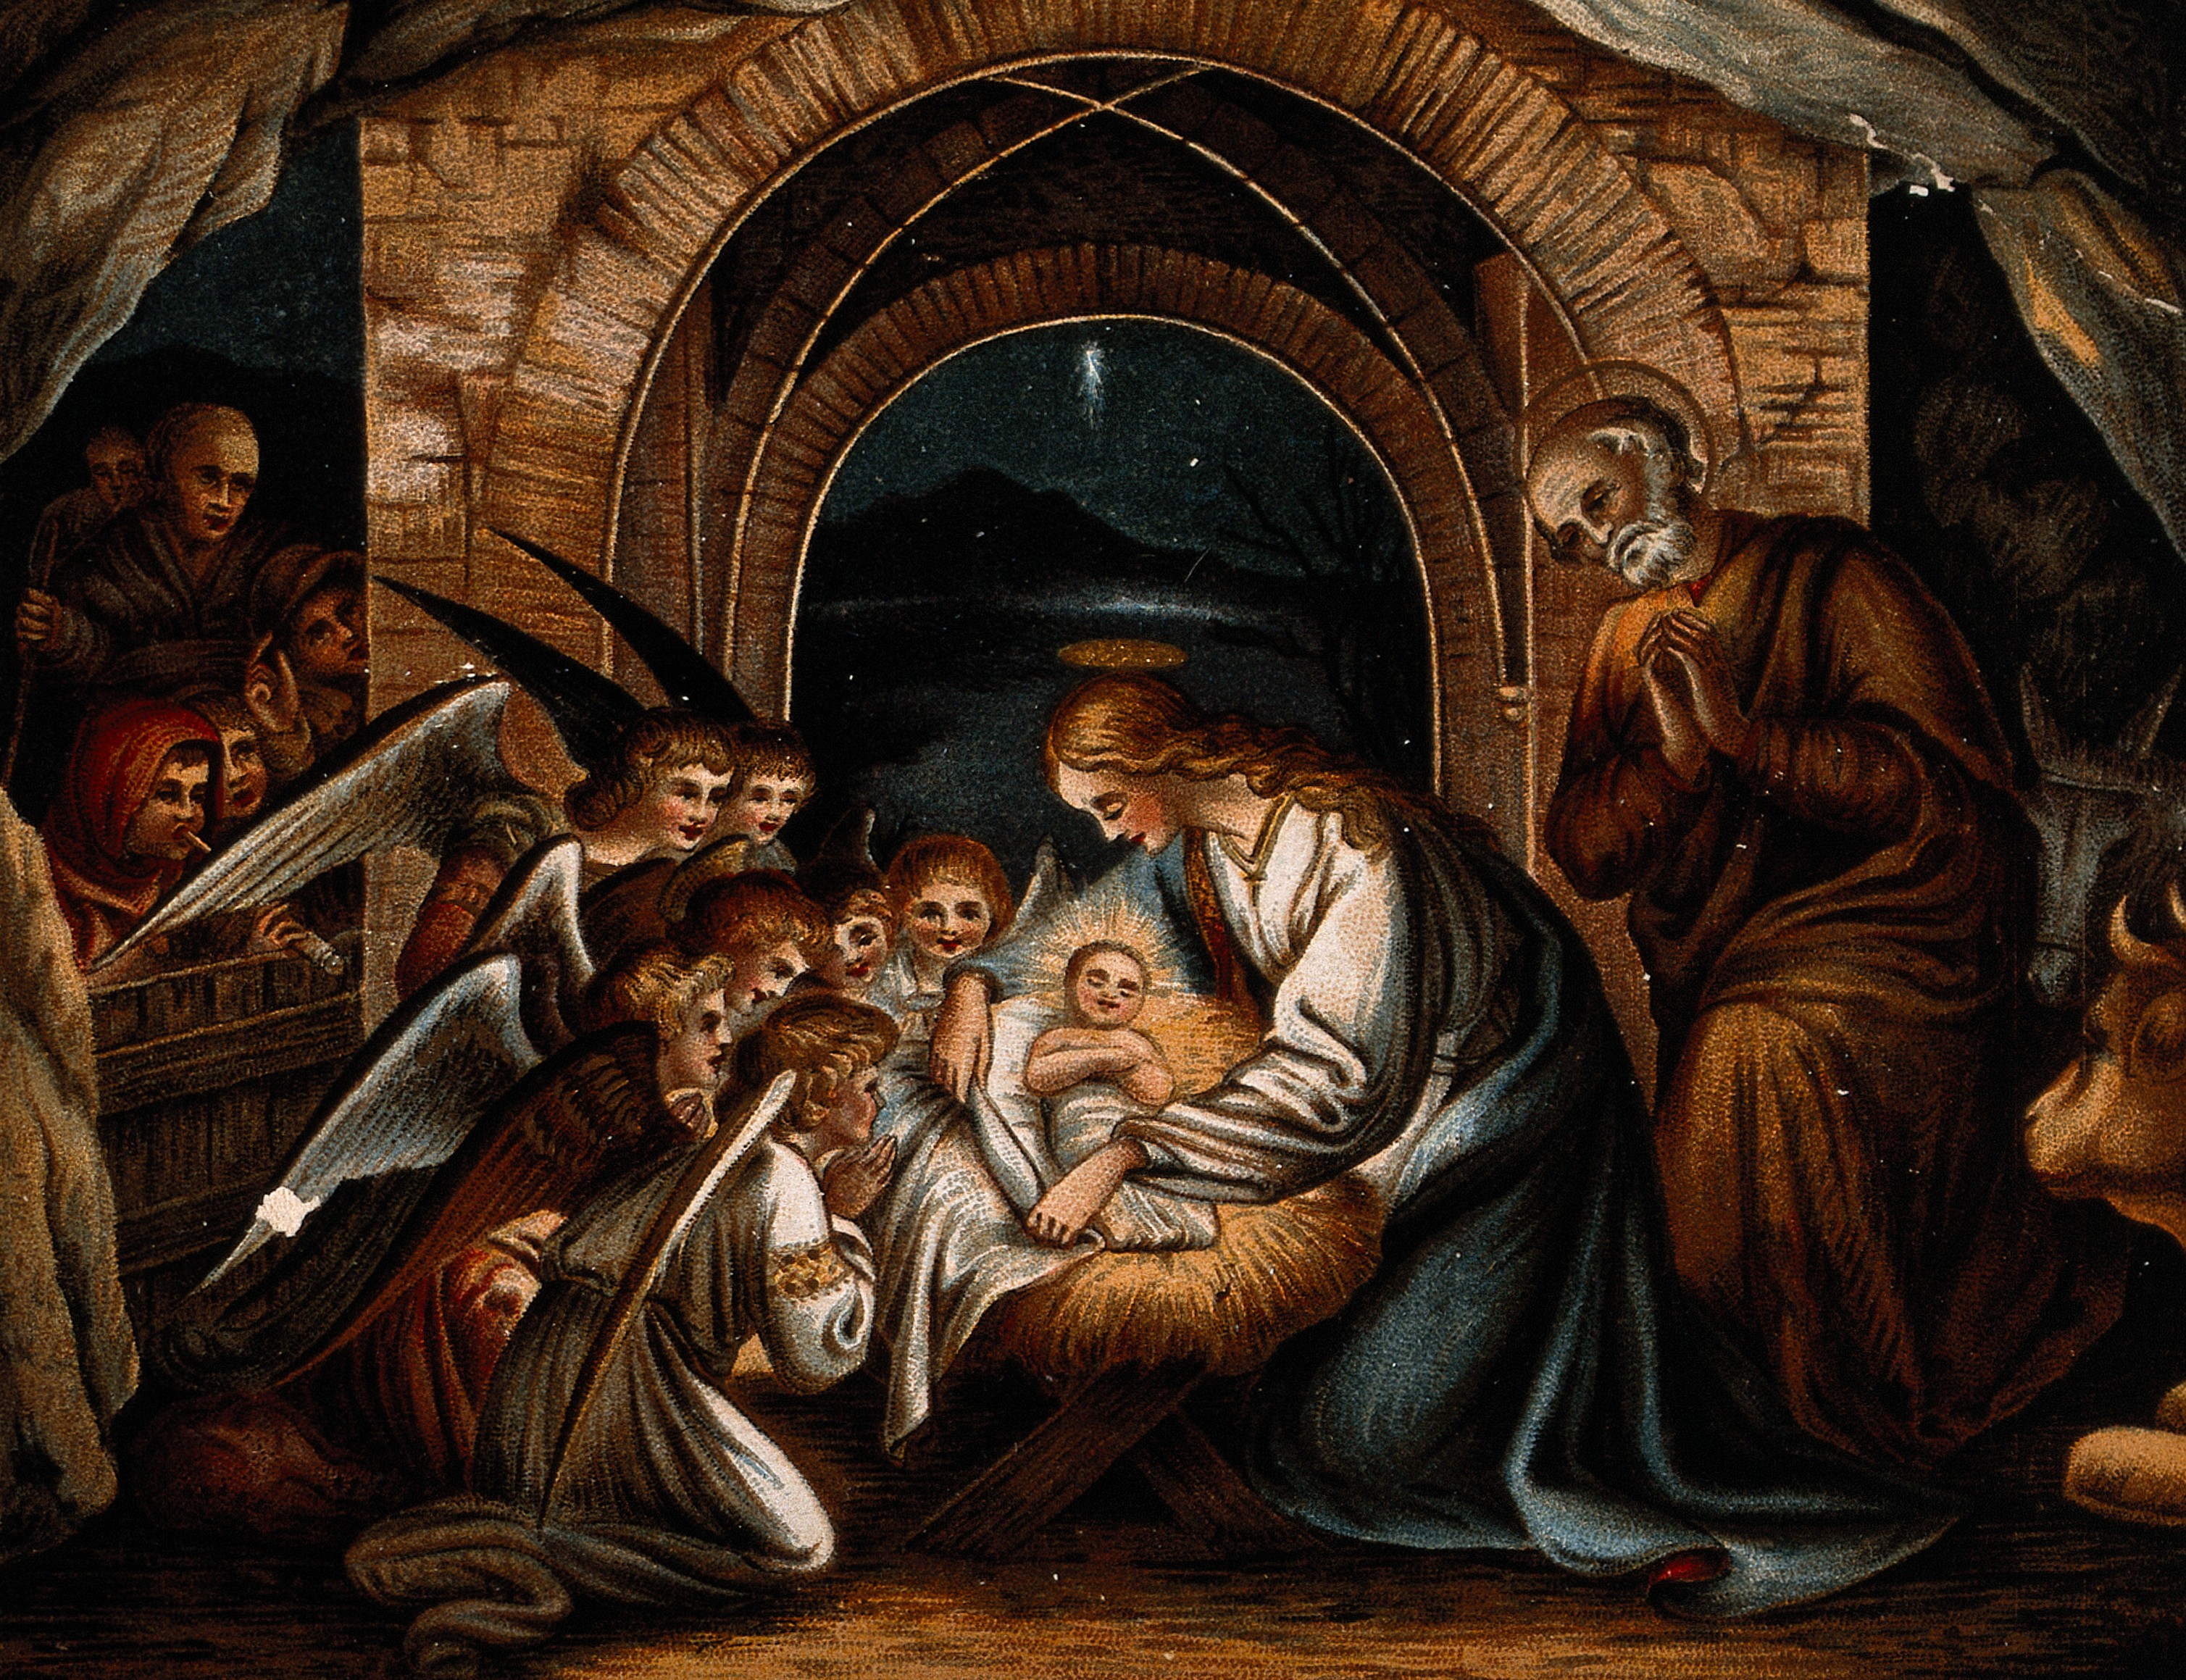 Jesus being born